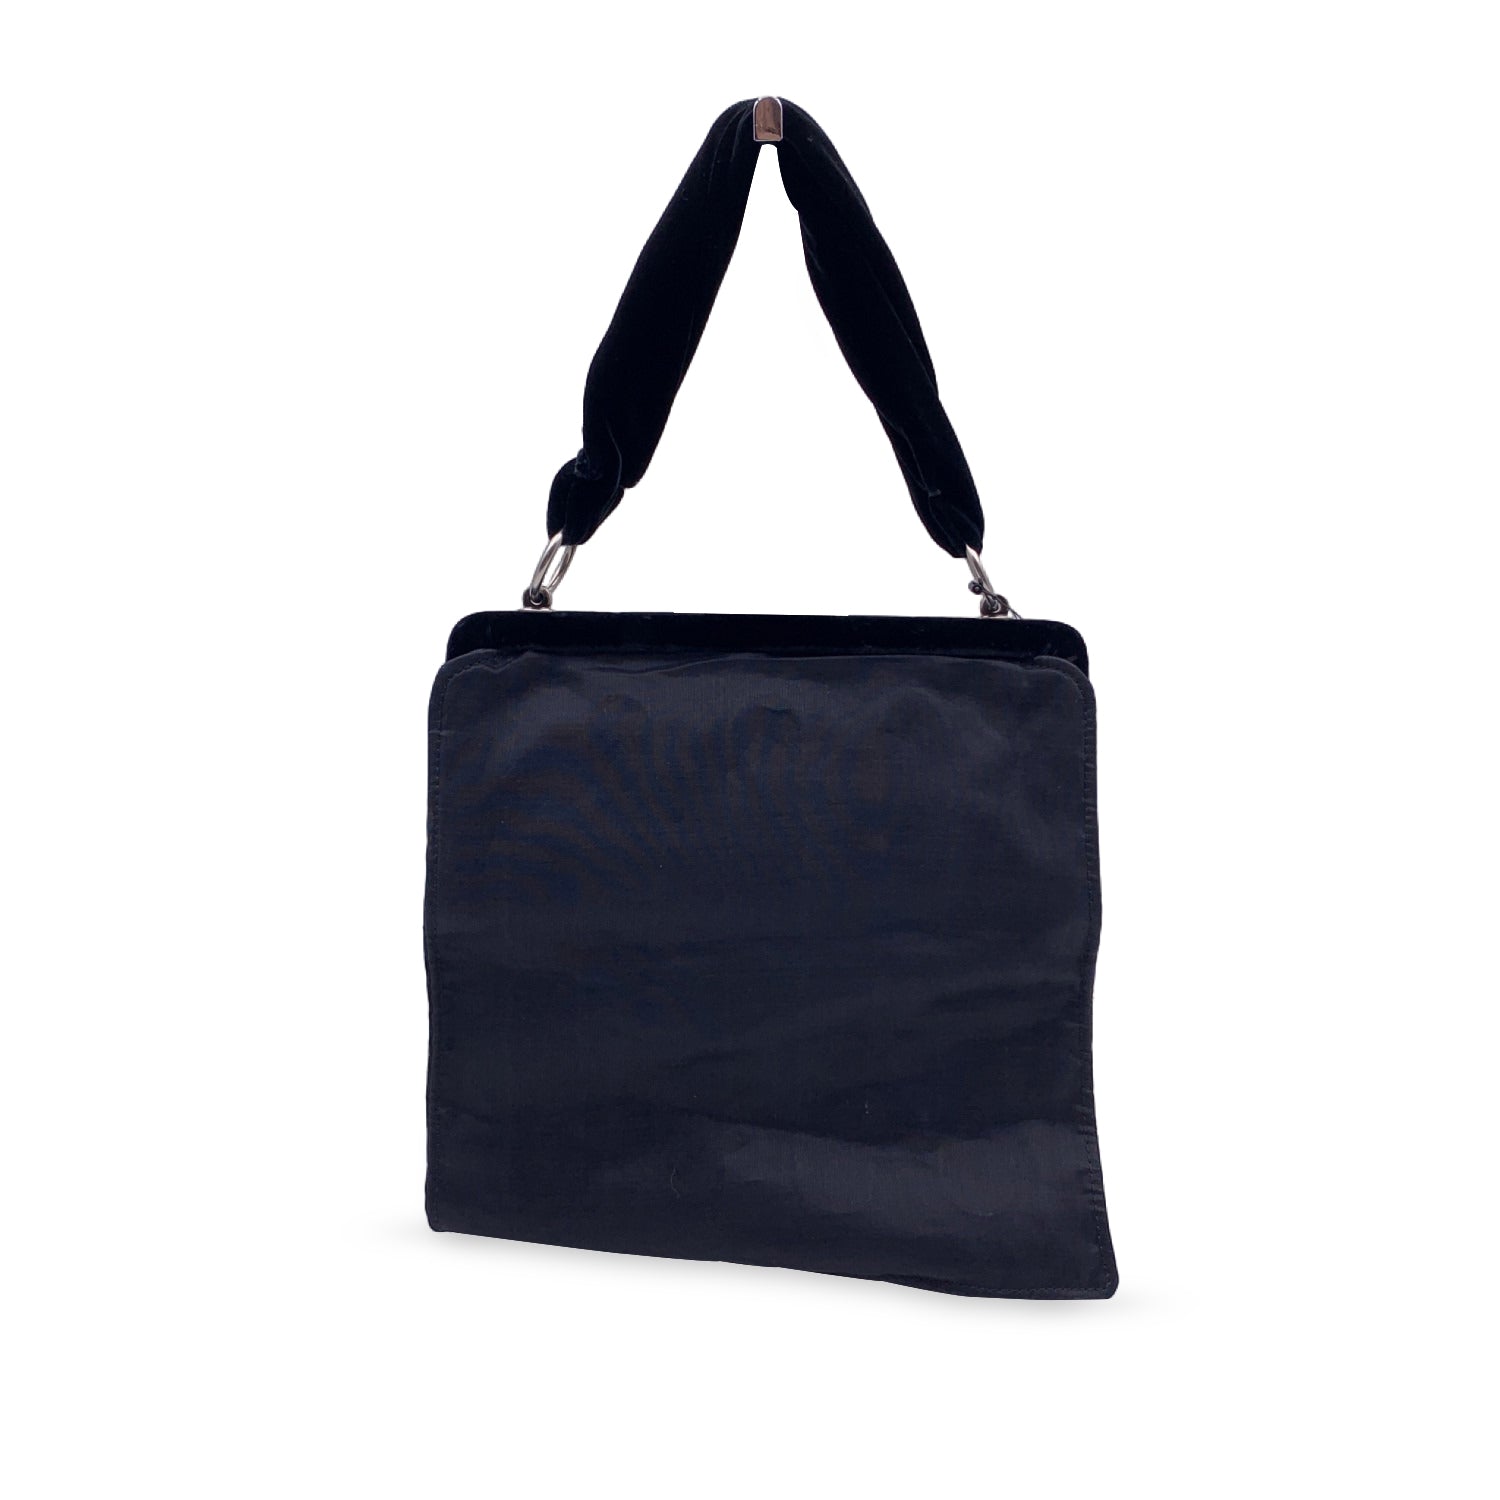 Yves Saint Laurent Handbags for sale in El Paso, Texas | Facebook  Marketplace | Facebook